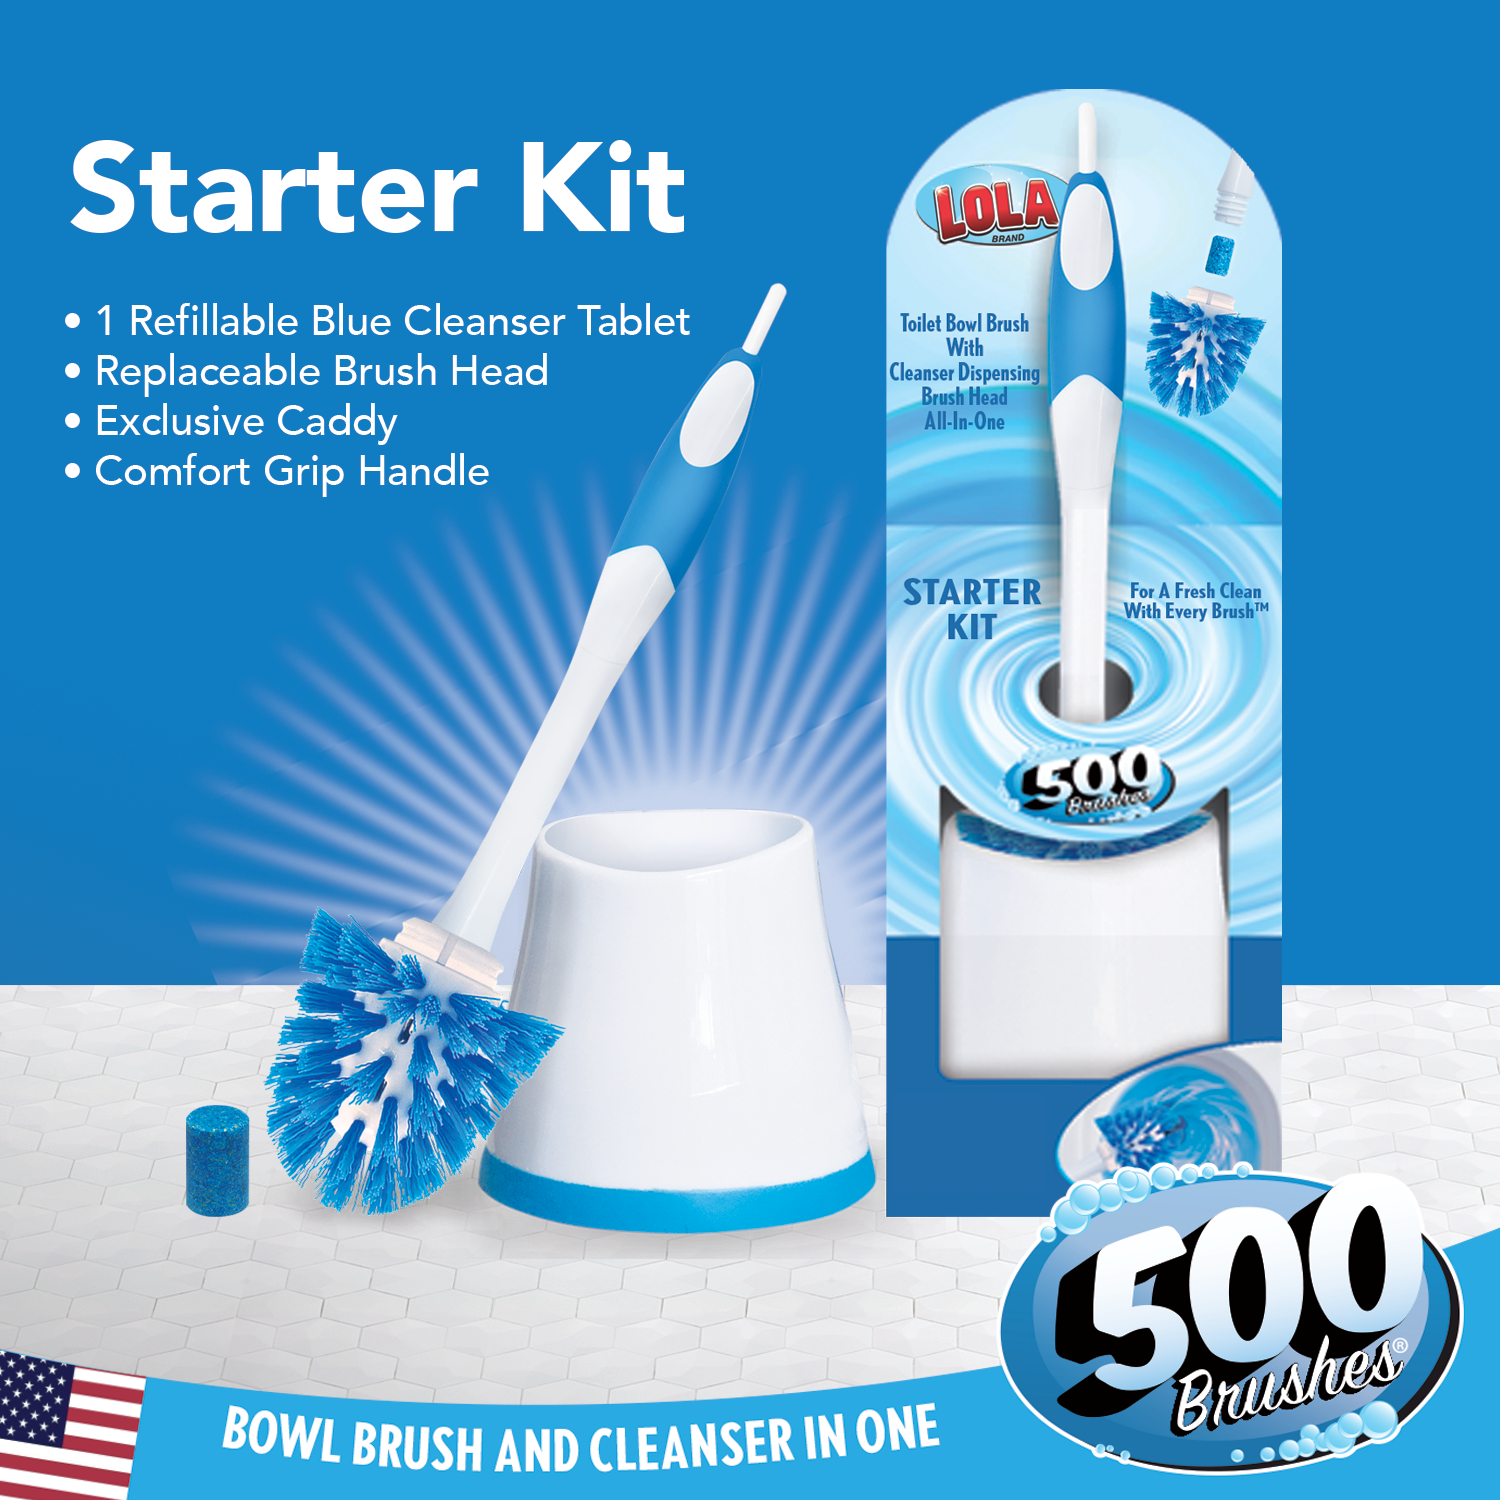 500 Brushes - Replacement Brush Head For Toilet Bowl Brush | New Innovative Cleanser Dispensing Toilet Brush Head | Durable Nylon Treated Fiber Bristles | Odor Free & Rust-Resistant | Reusable - 1 Pack